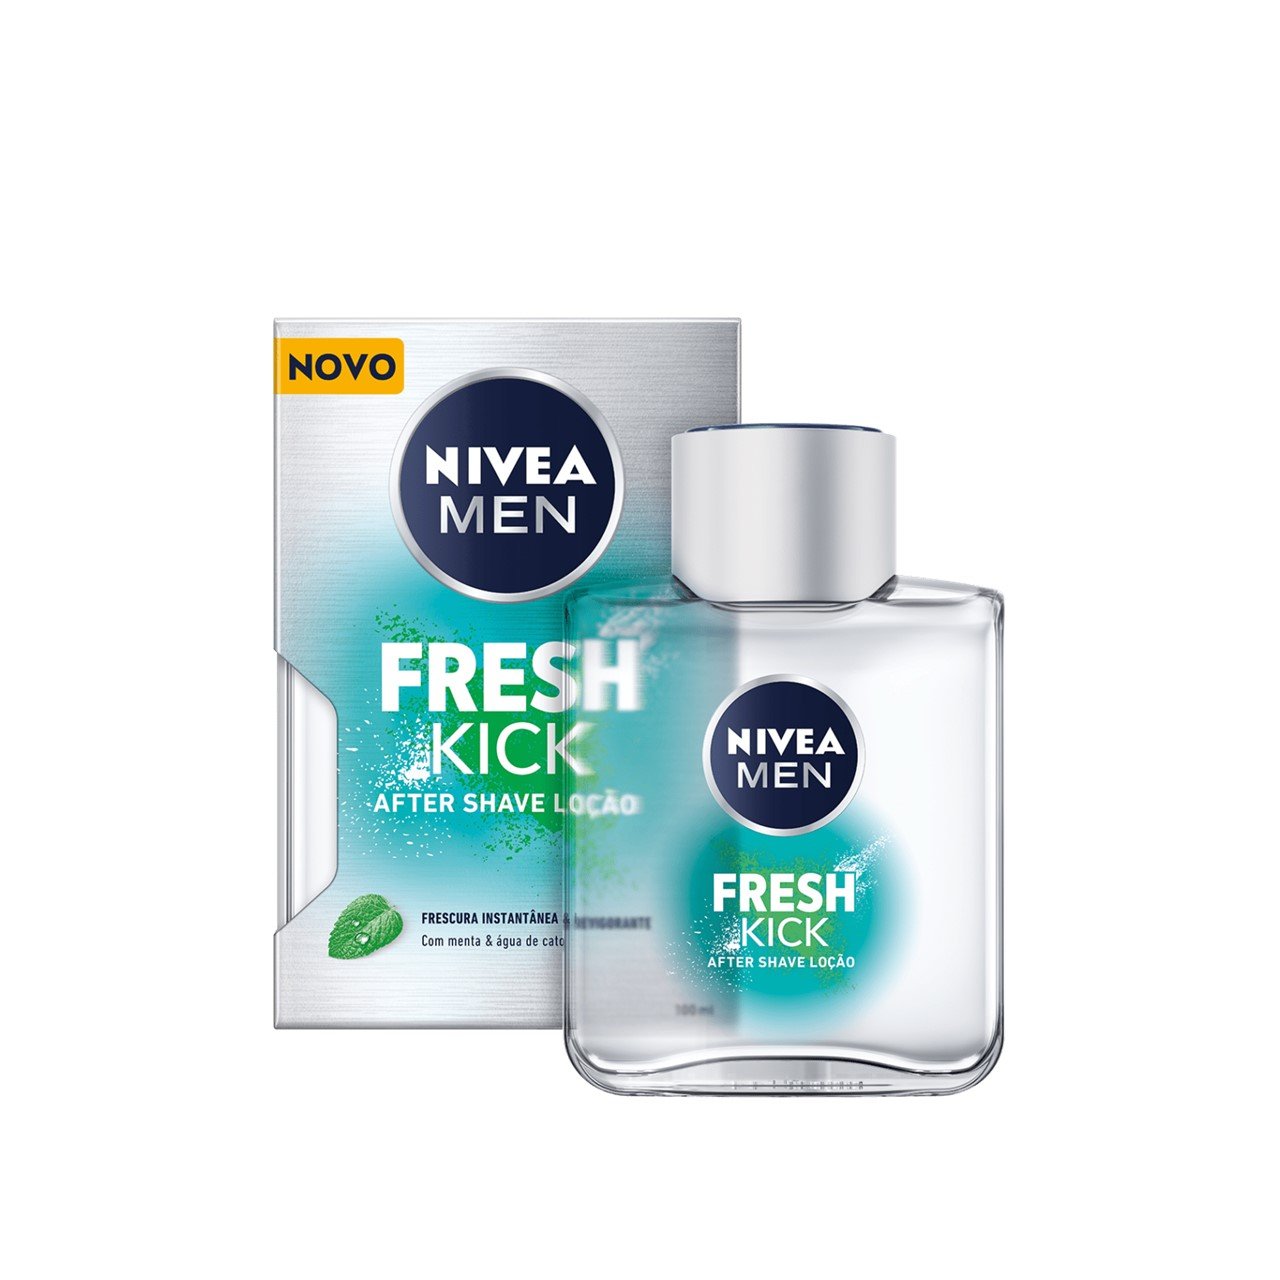 leerling stoeprand vrije tijd Buy Nivea Men Fresh Kick After Shave Lotion 100ml (3.38fl oz) · USA